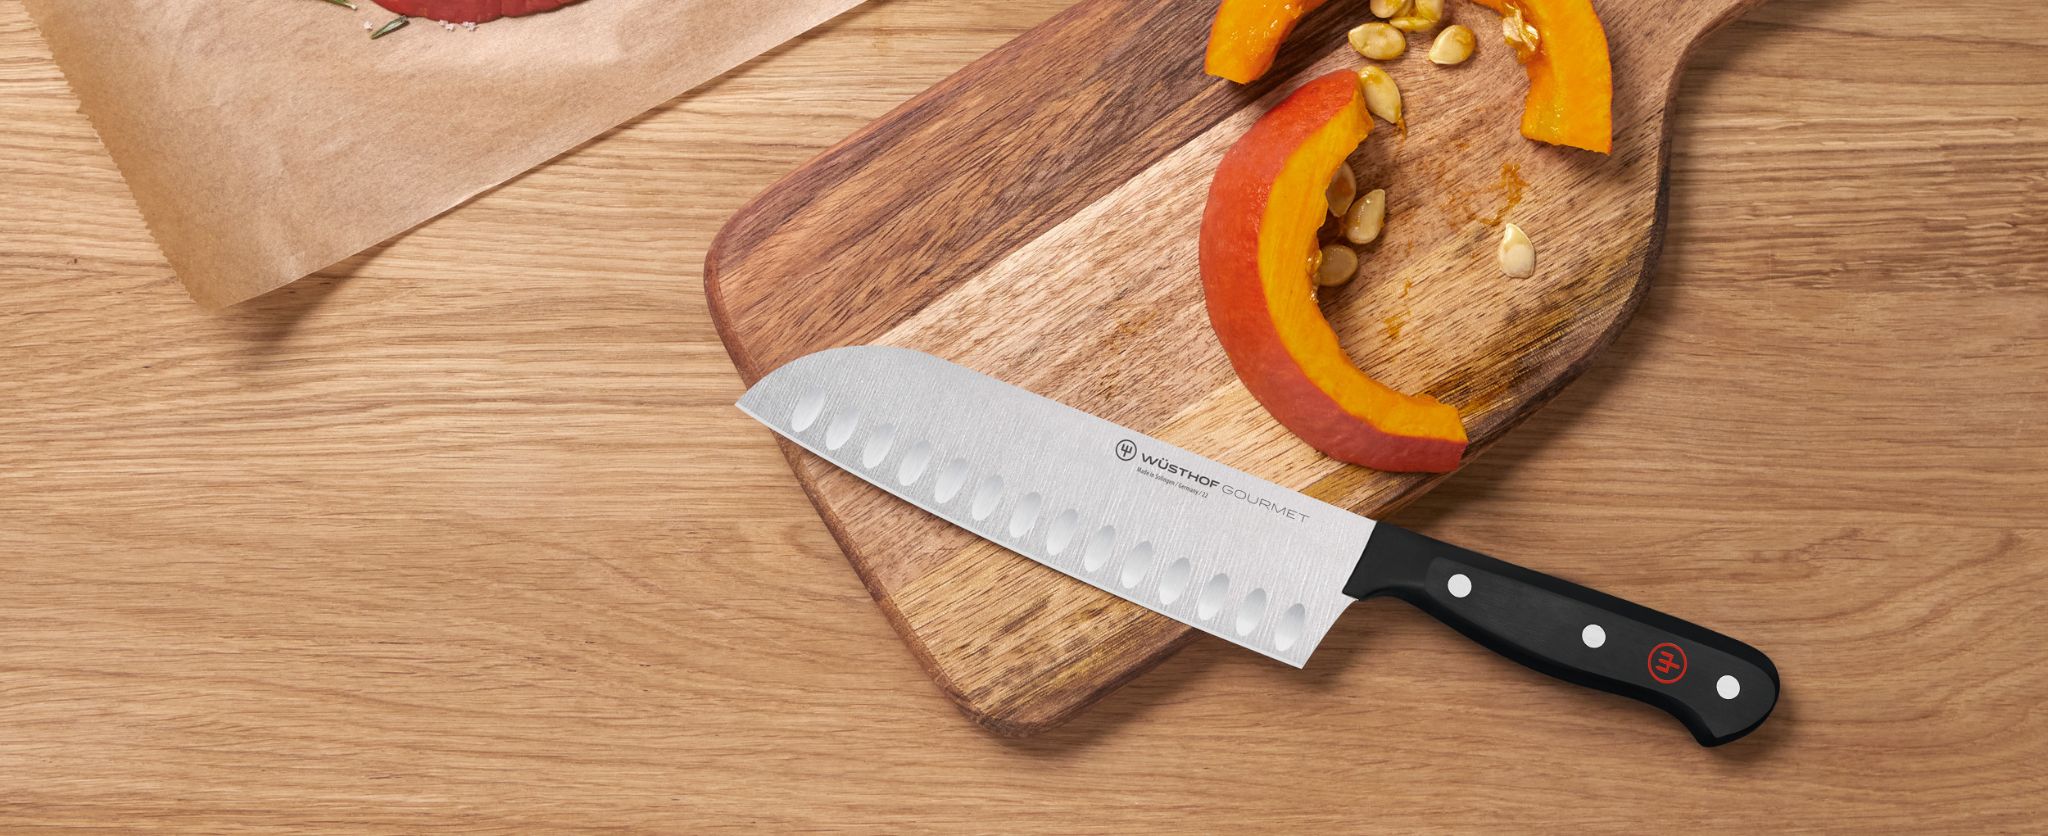 santoku knife on cutting board near sliced fruit